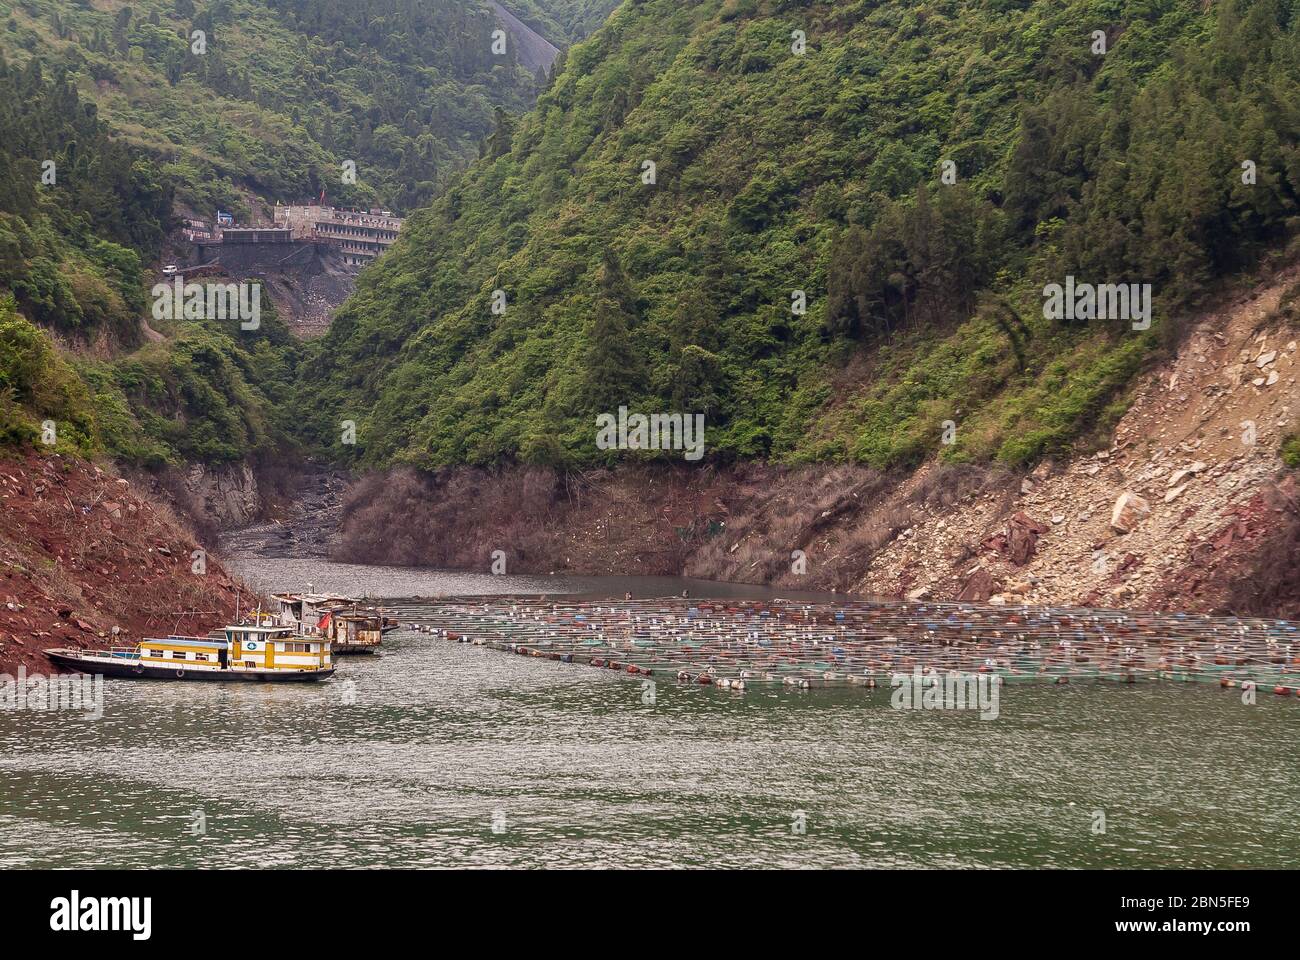 Xinling, China - May 6, 2010: Xiling gorge on Yangtze River. Large fish pen operation with small boats along shoreline at water canyon between steep g Stock Photo